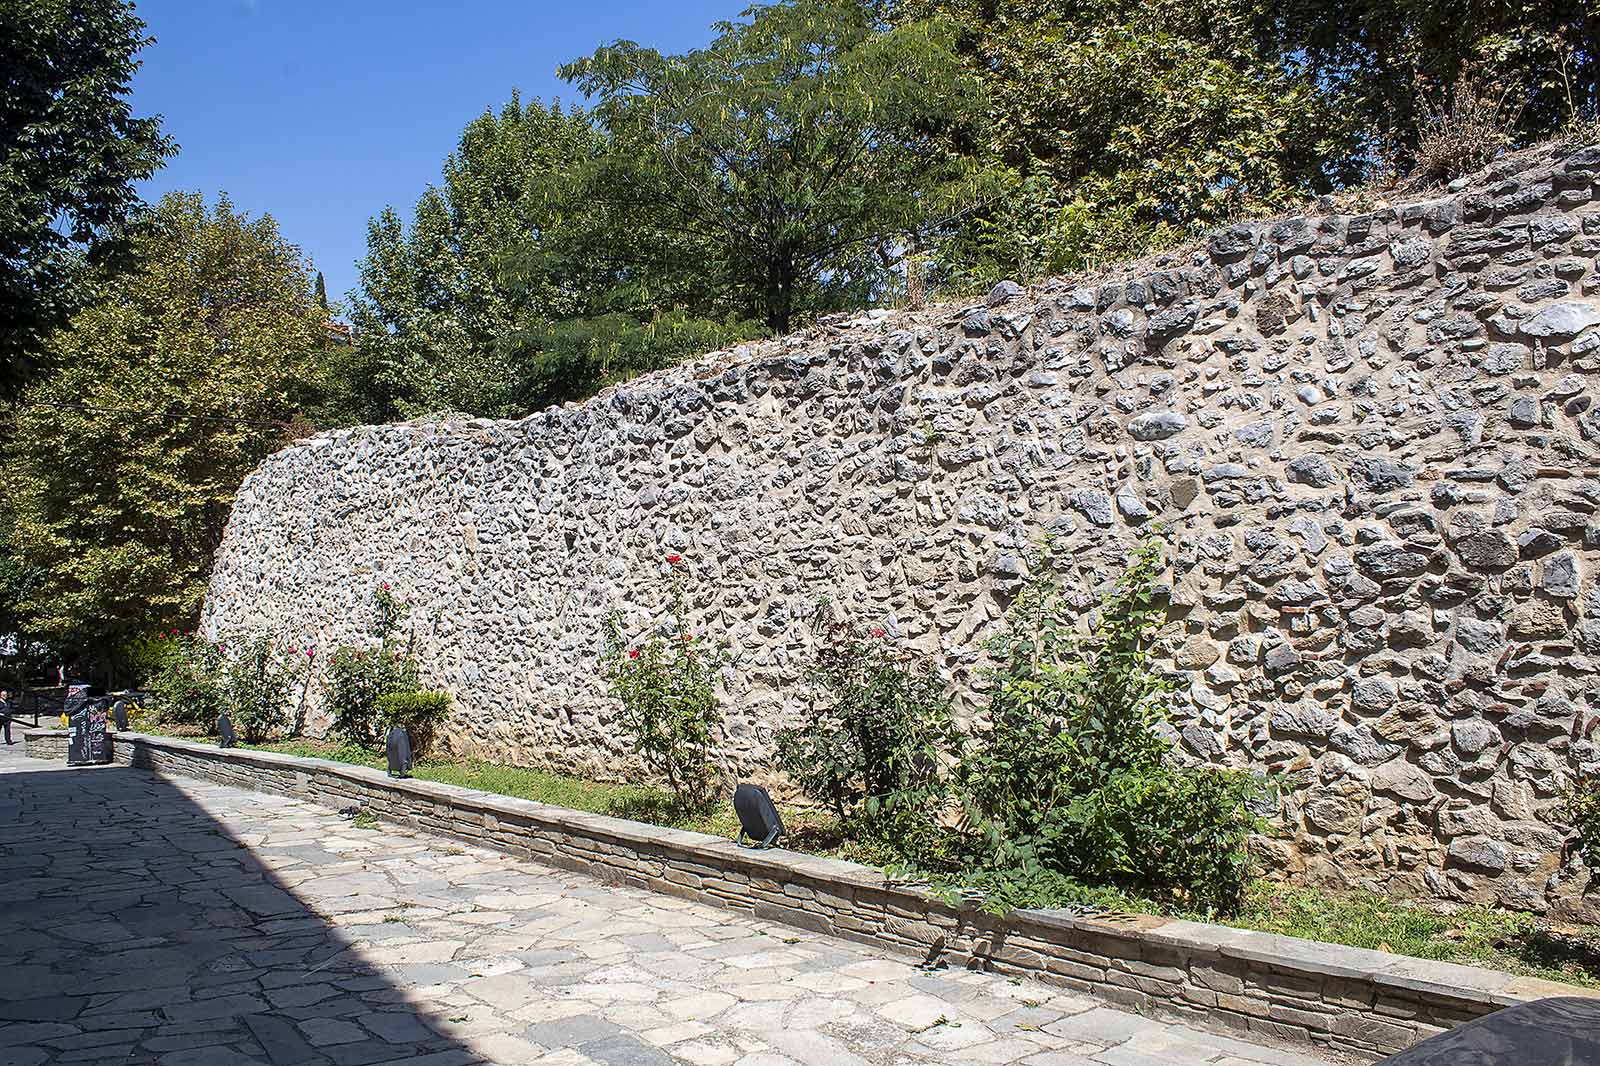 Byzantine Walls